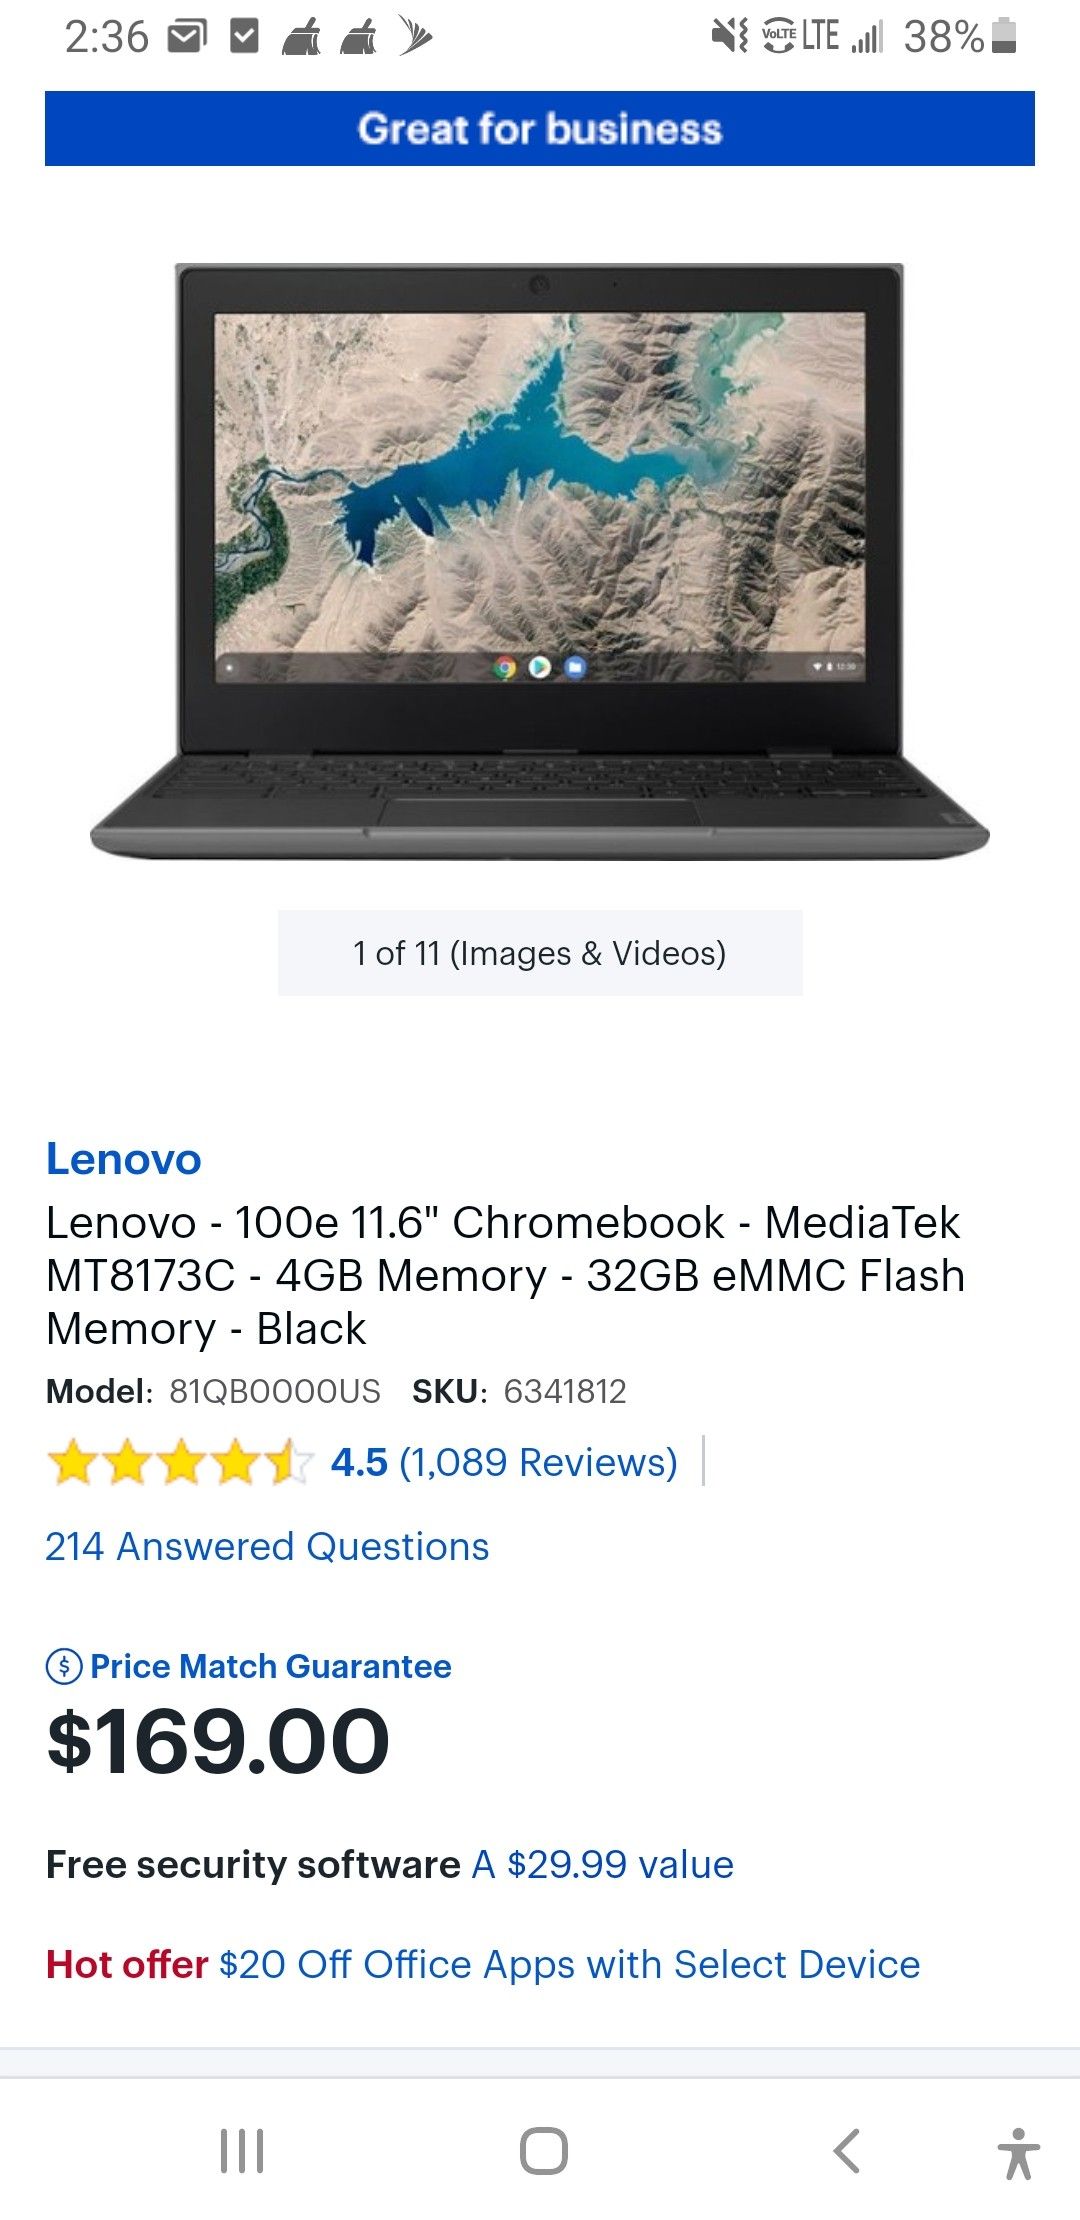 Lenovo 100e chromebook laptop